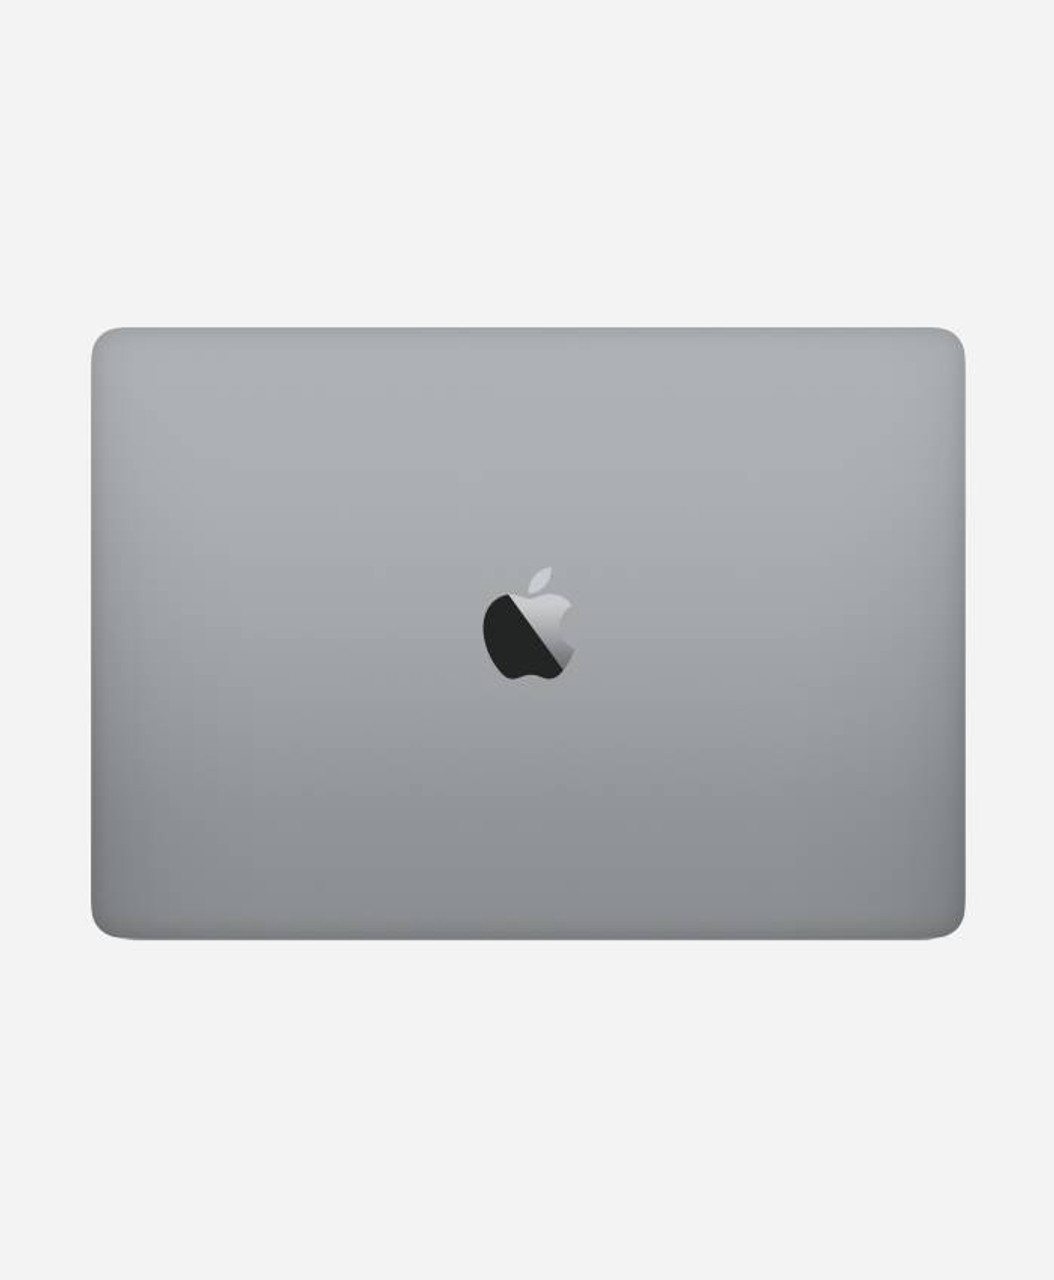 Used Apple Macbook Pro 15.4-inch (Retina DG